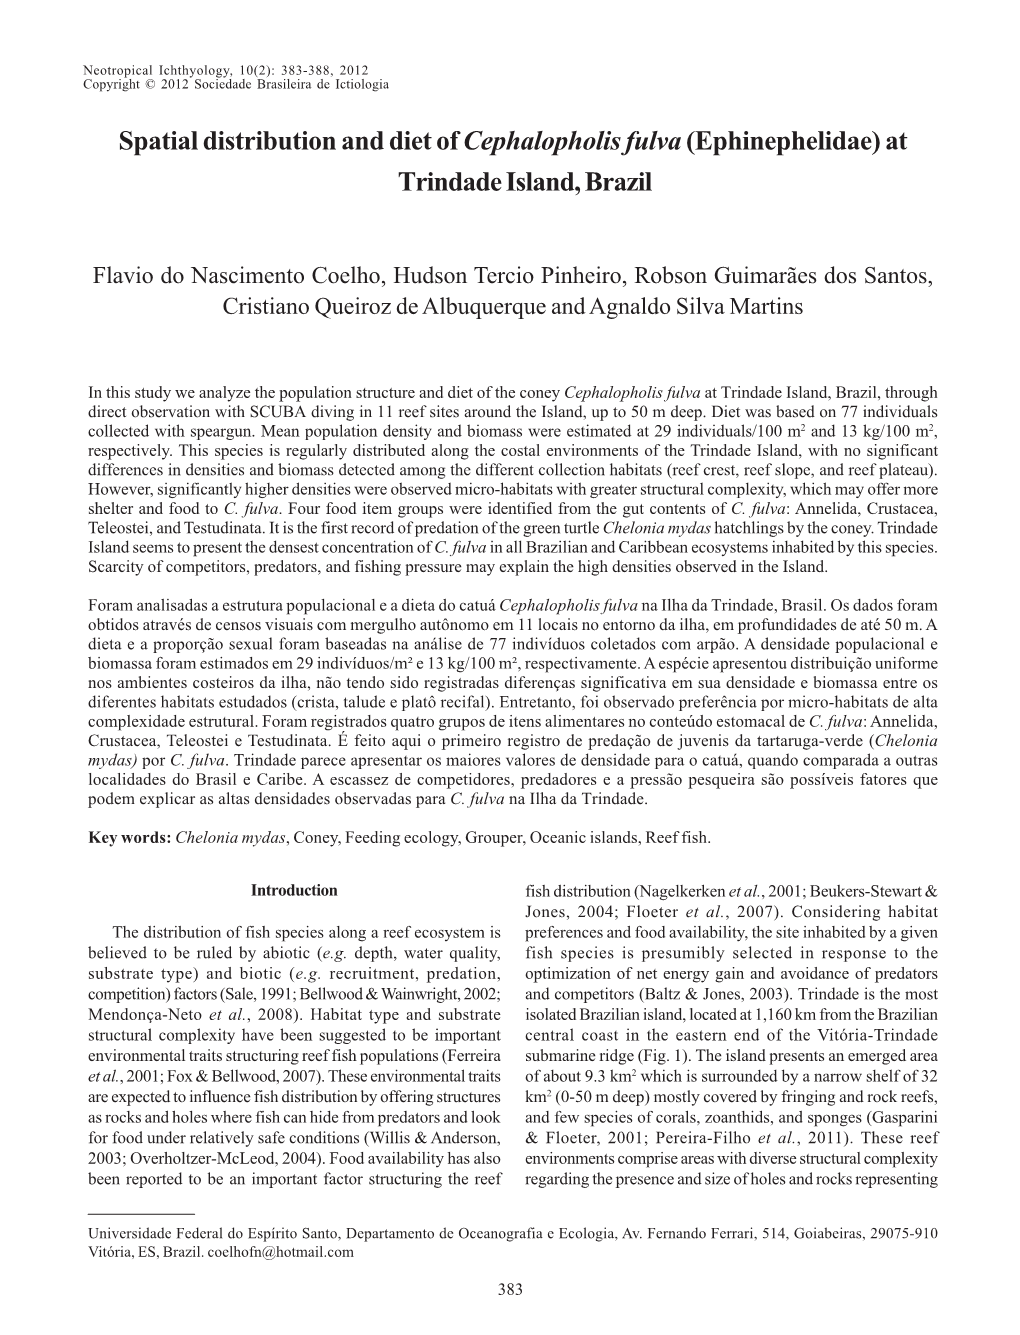 Spatial Distribution and Diet of Cephalopholis Fulva (Ephinephelidae) at Trindade Island, Brazil